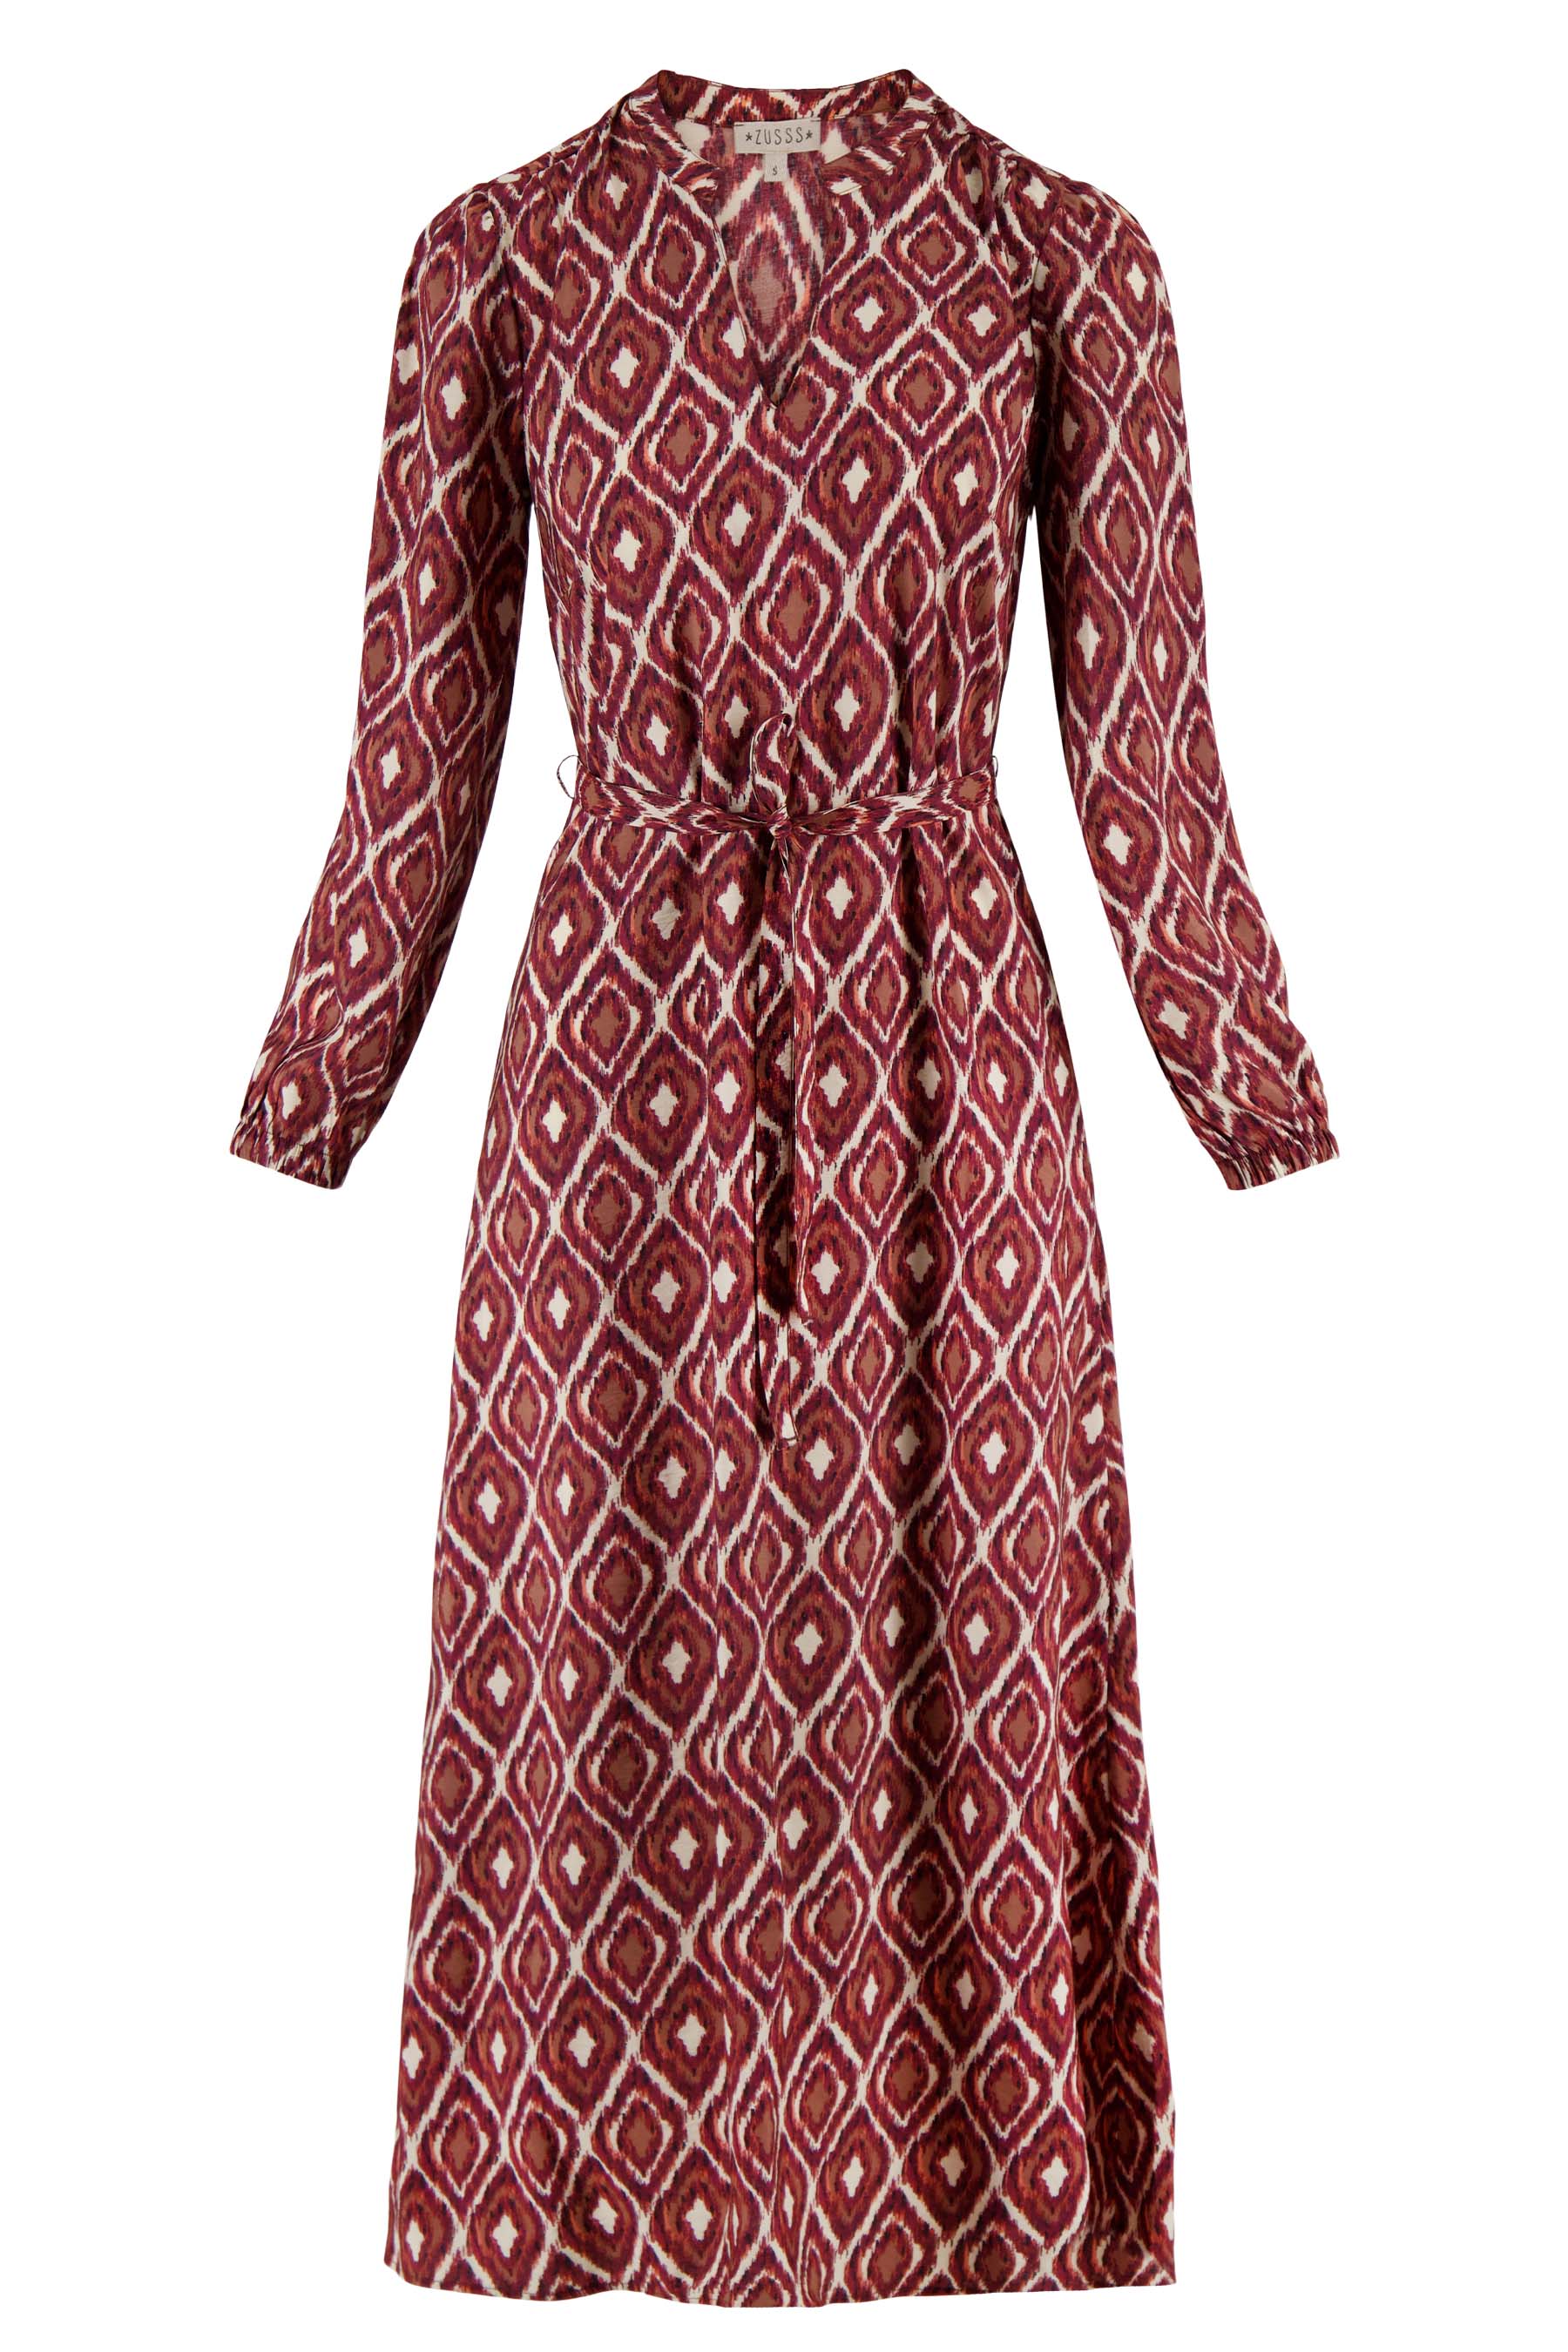 Maxi jurk met ikat print - Zusss maxi jurk met ikat print zand roodbruin 0301 056 7037 voor 1 - 189